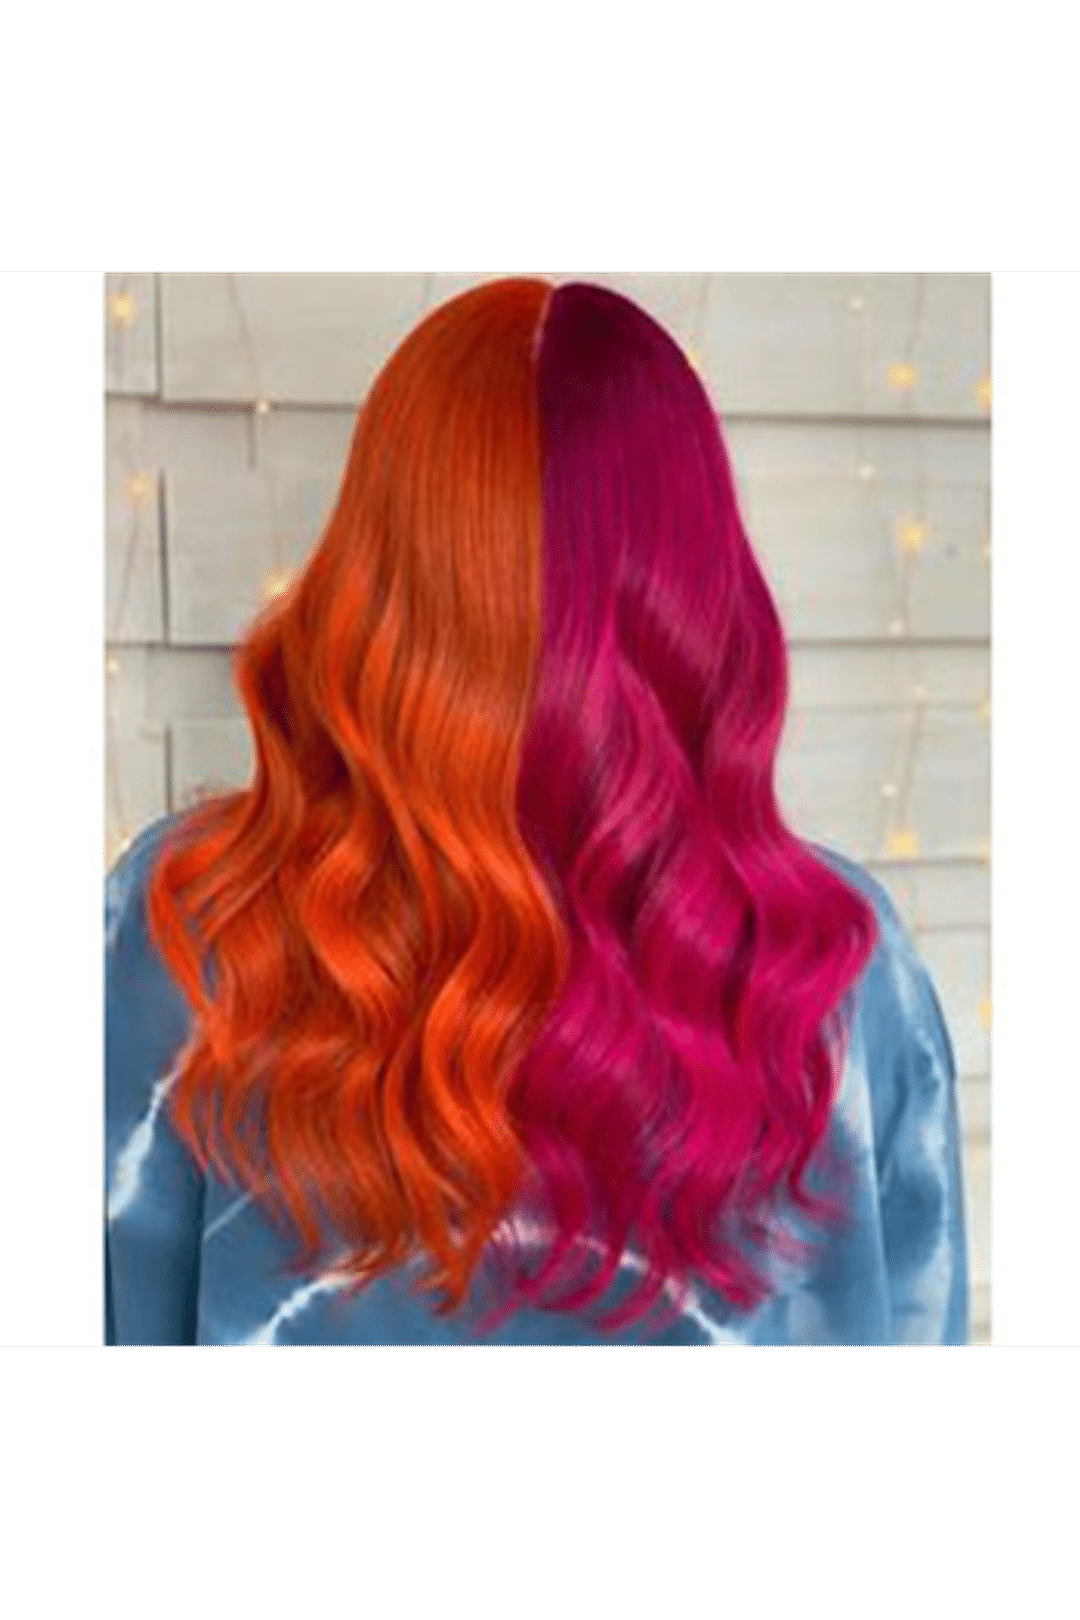 Crazy Color Semi Permanent Hair Color Cream - Orange